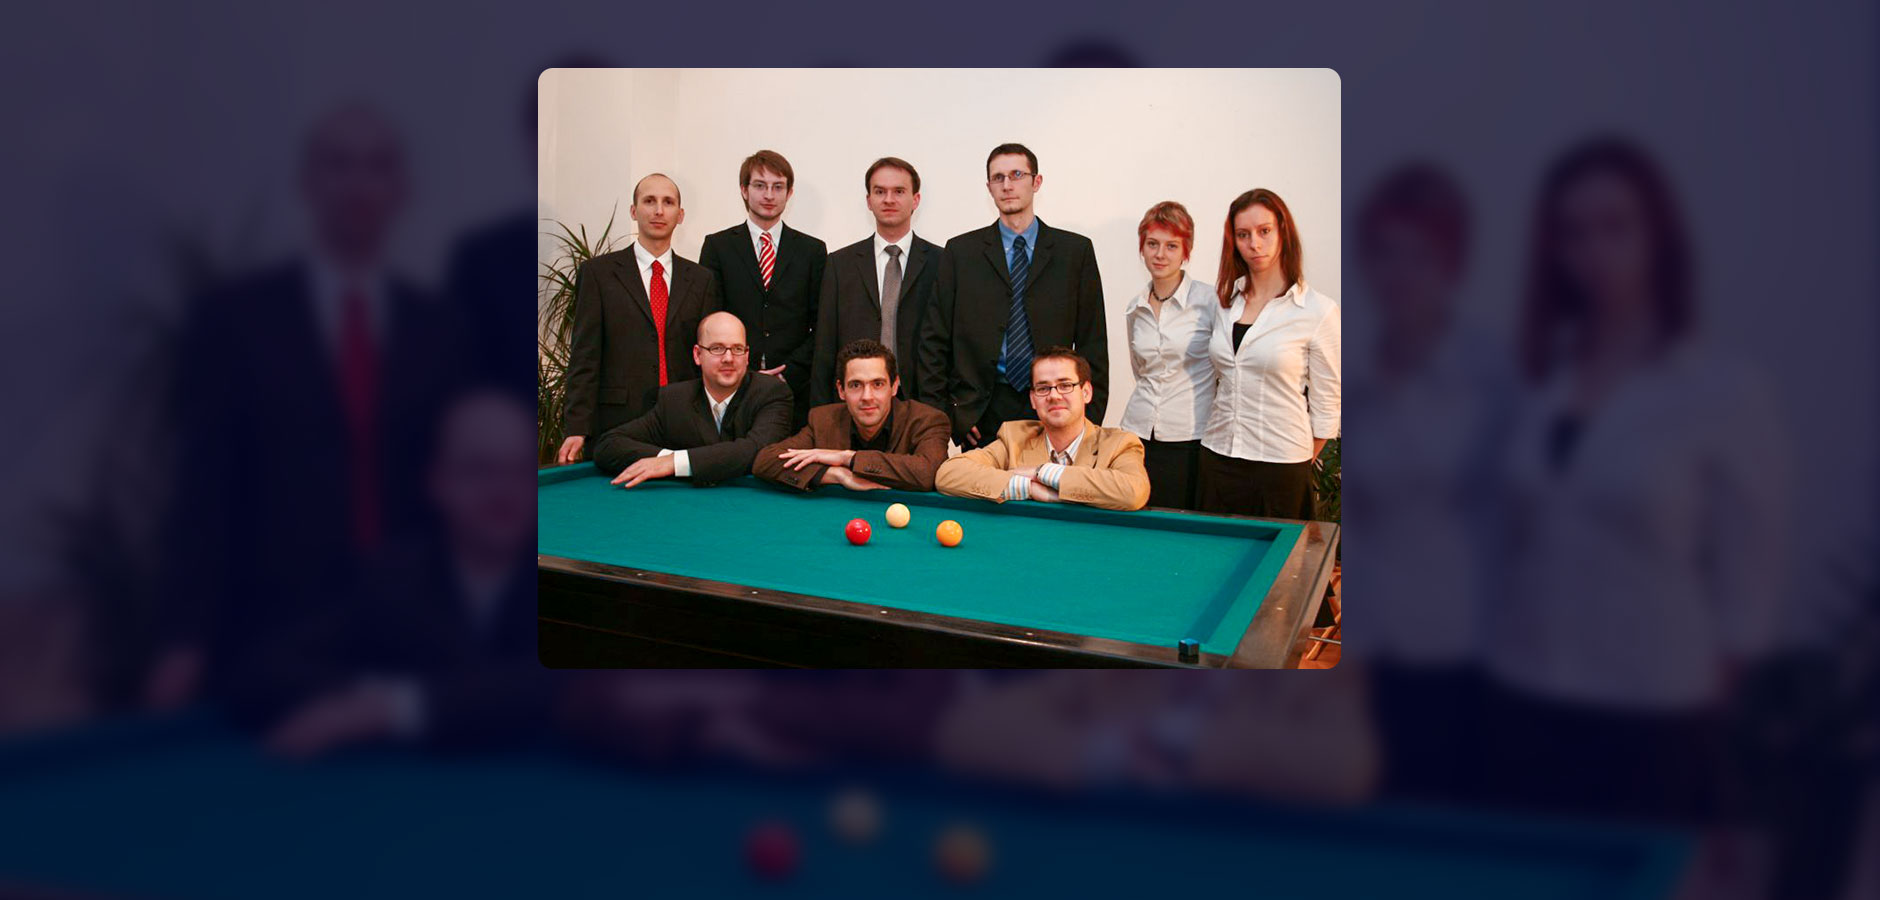 all nine employees together behind a billard table (Photo)